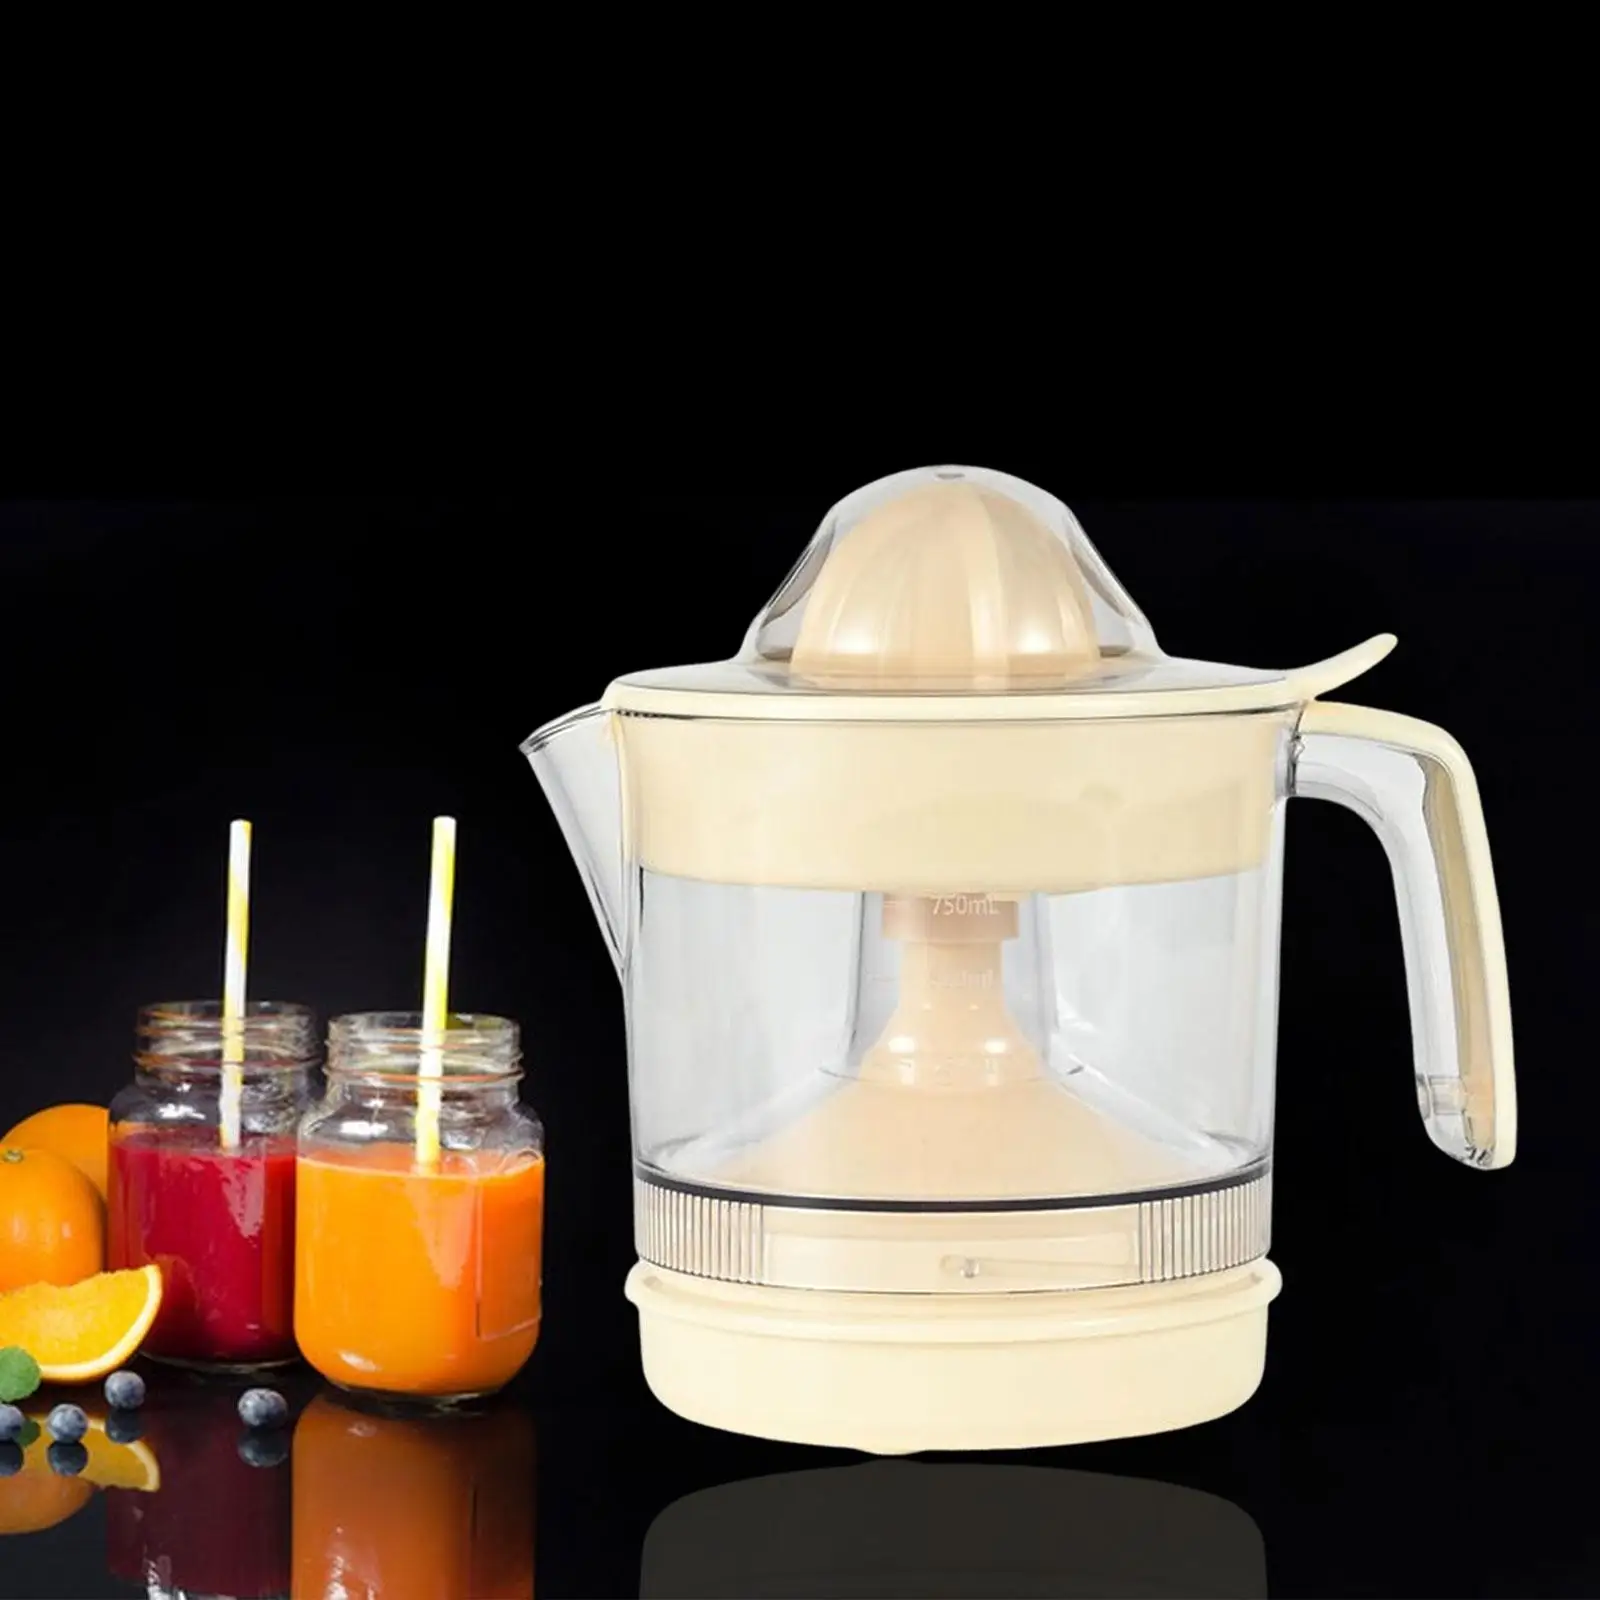 Electric Juicer Orange juicer Masticating Machine for Orange Fruit